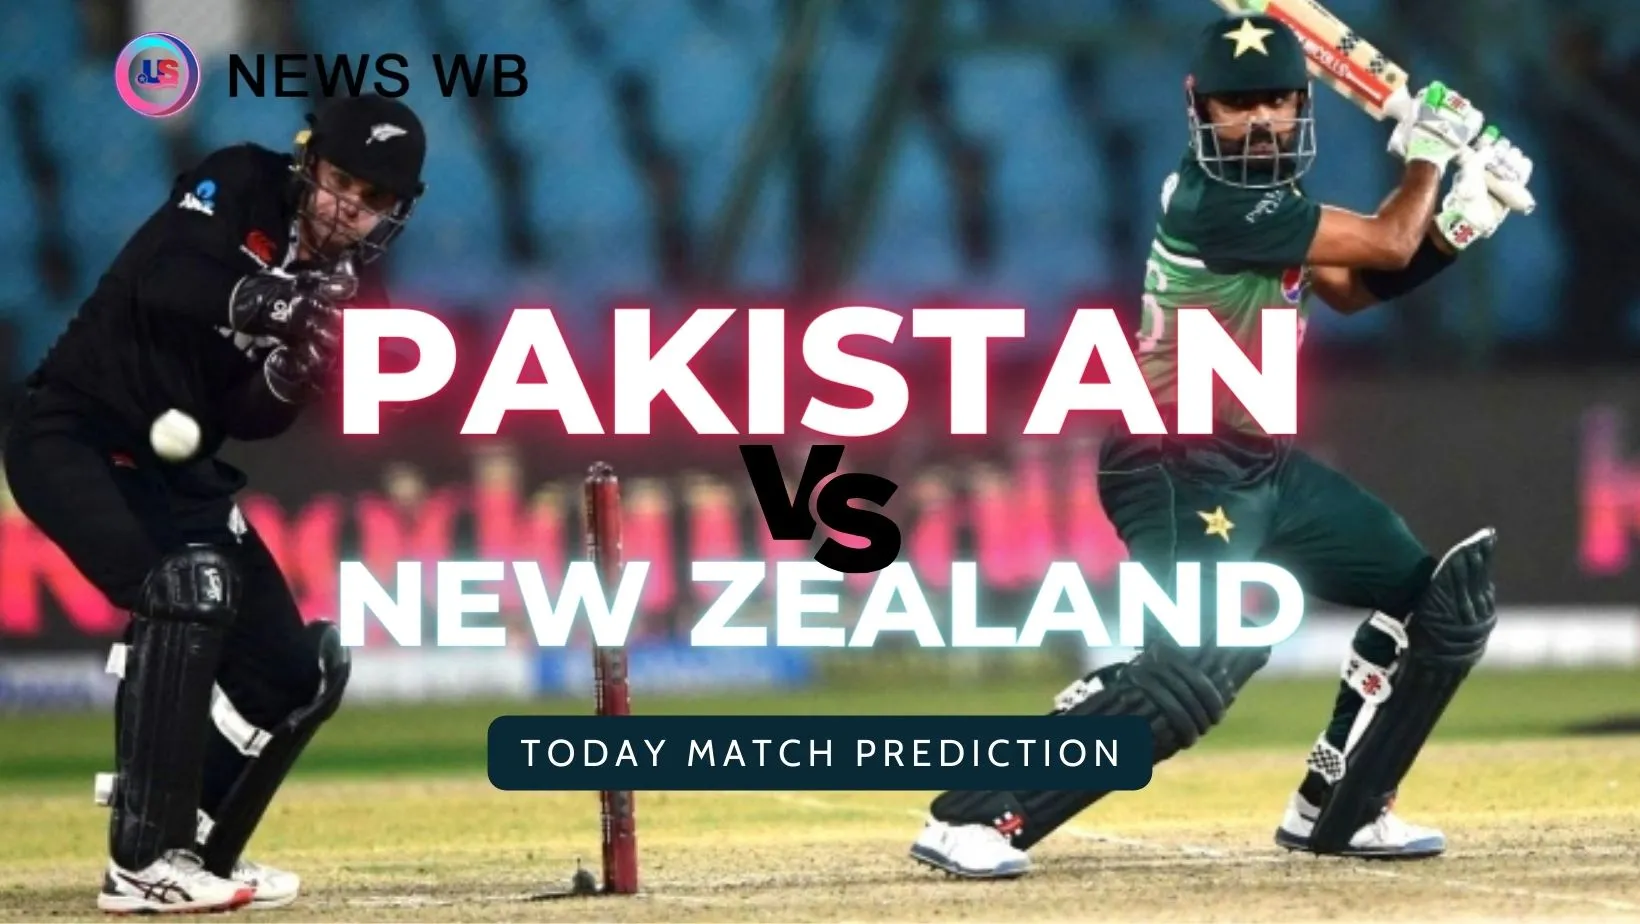 Today Match Prediction: PAK vs NZ Dream11 Team, New Zealand vs Pakistan 5th T20I, Who Will Win?